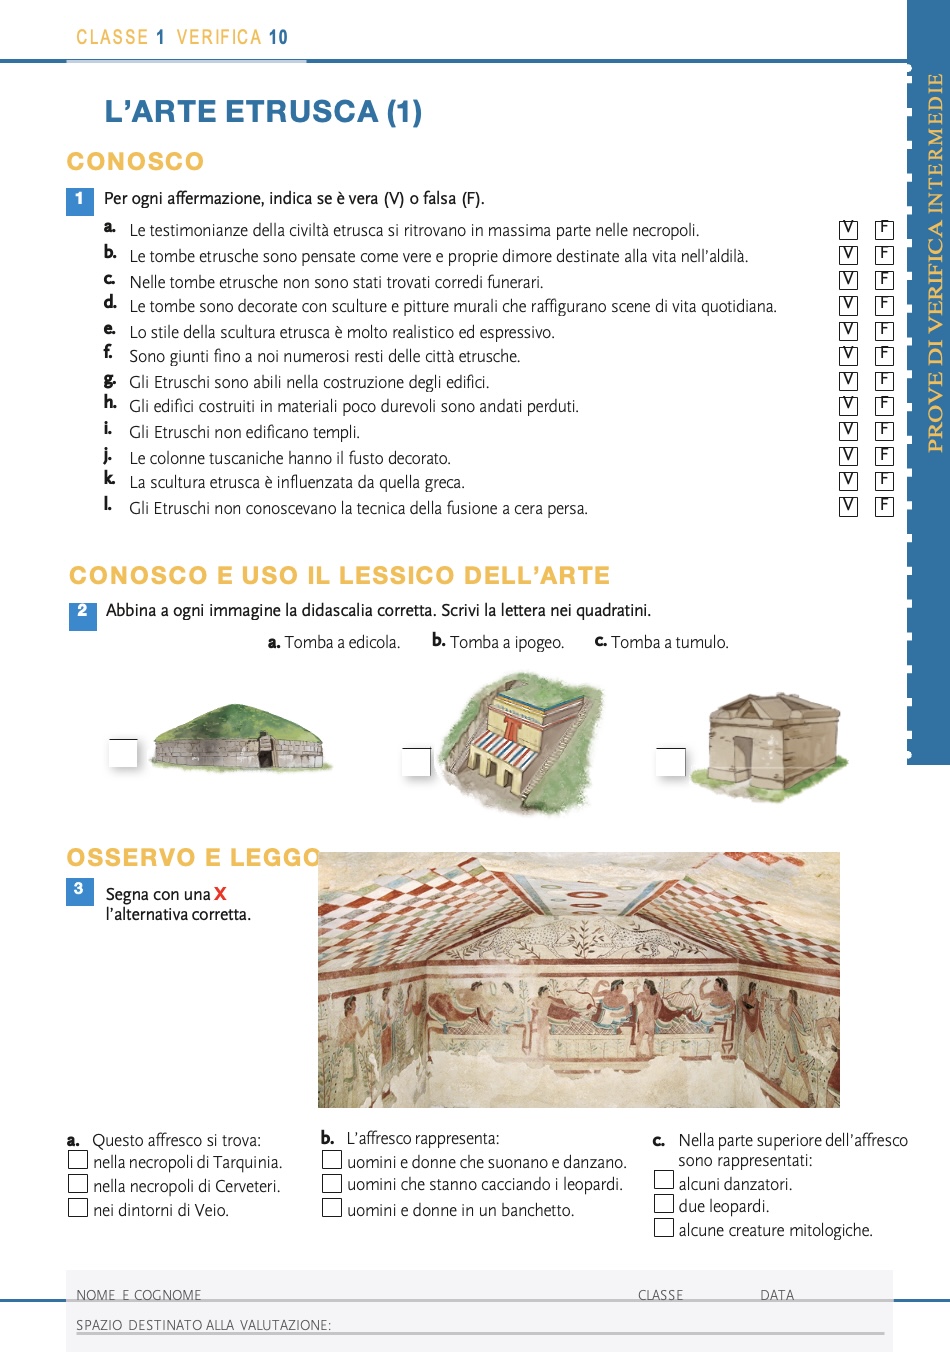 L'arte etrusca (1)